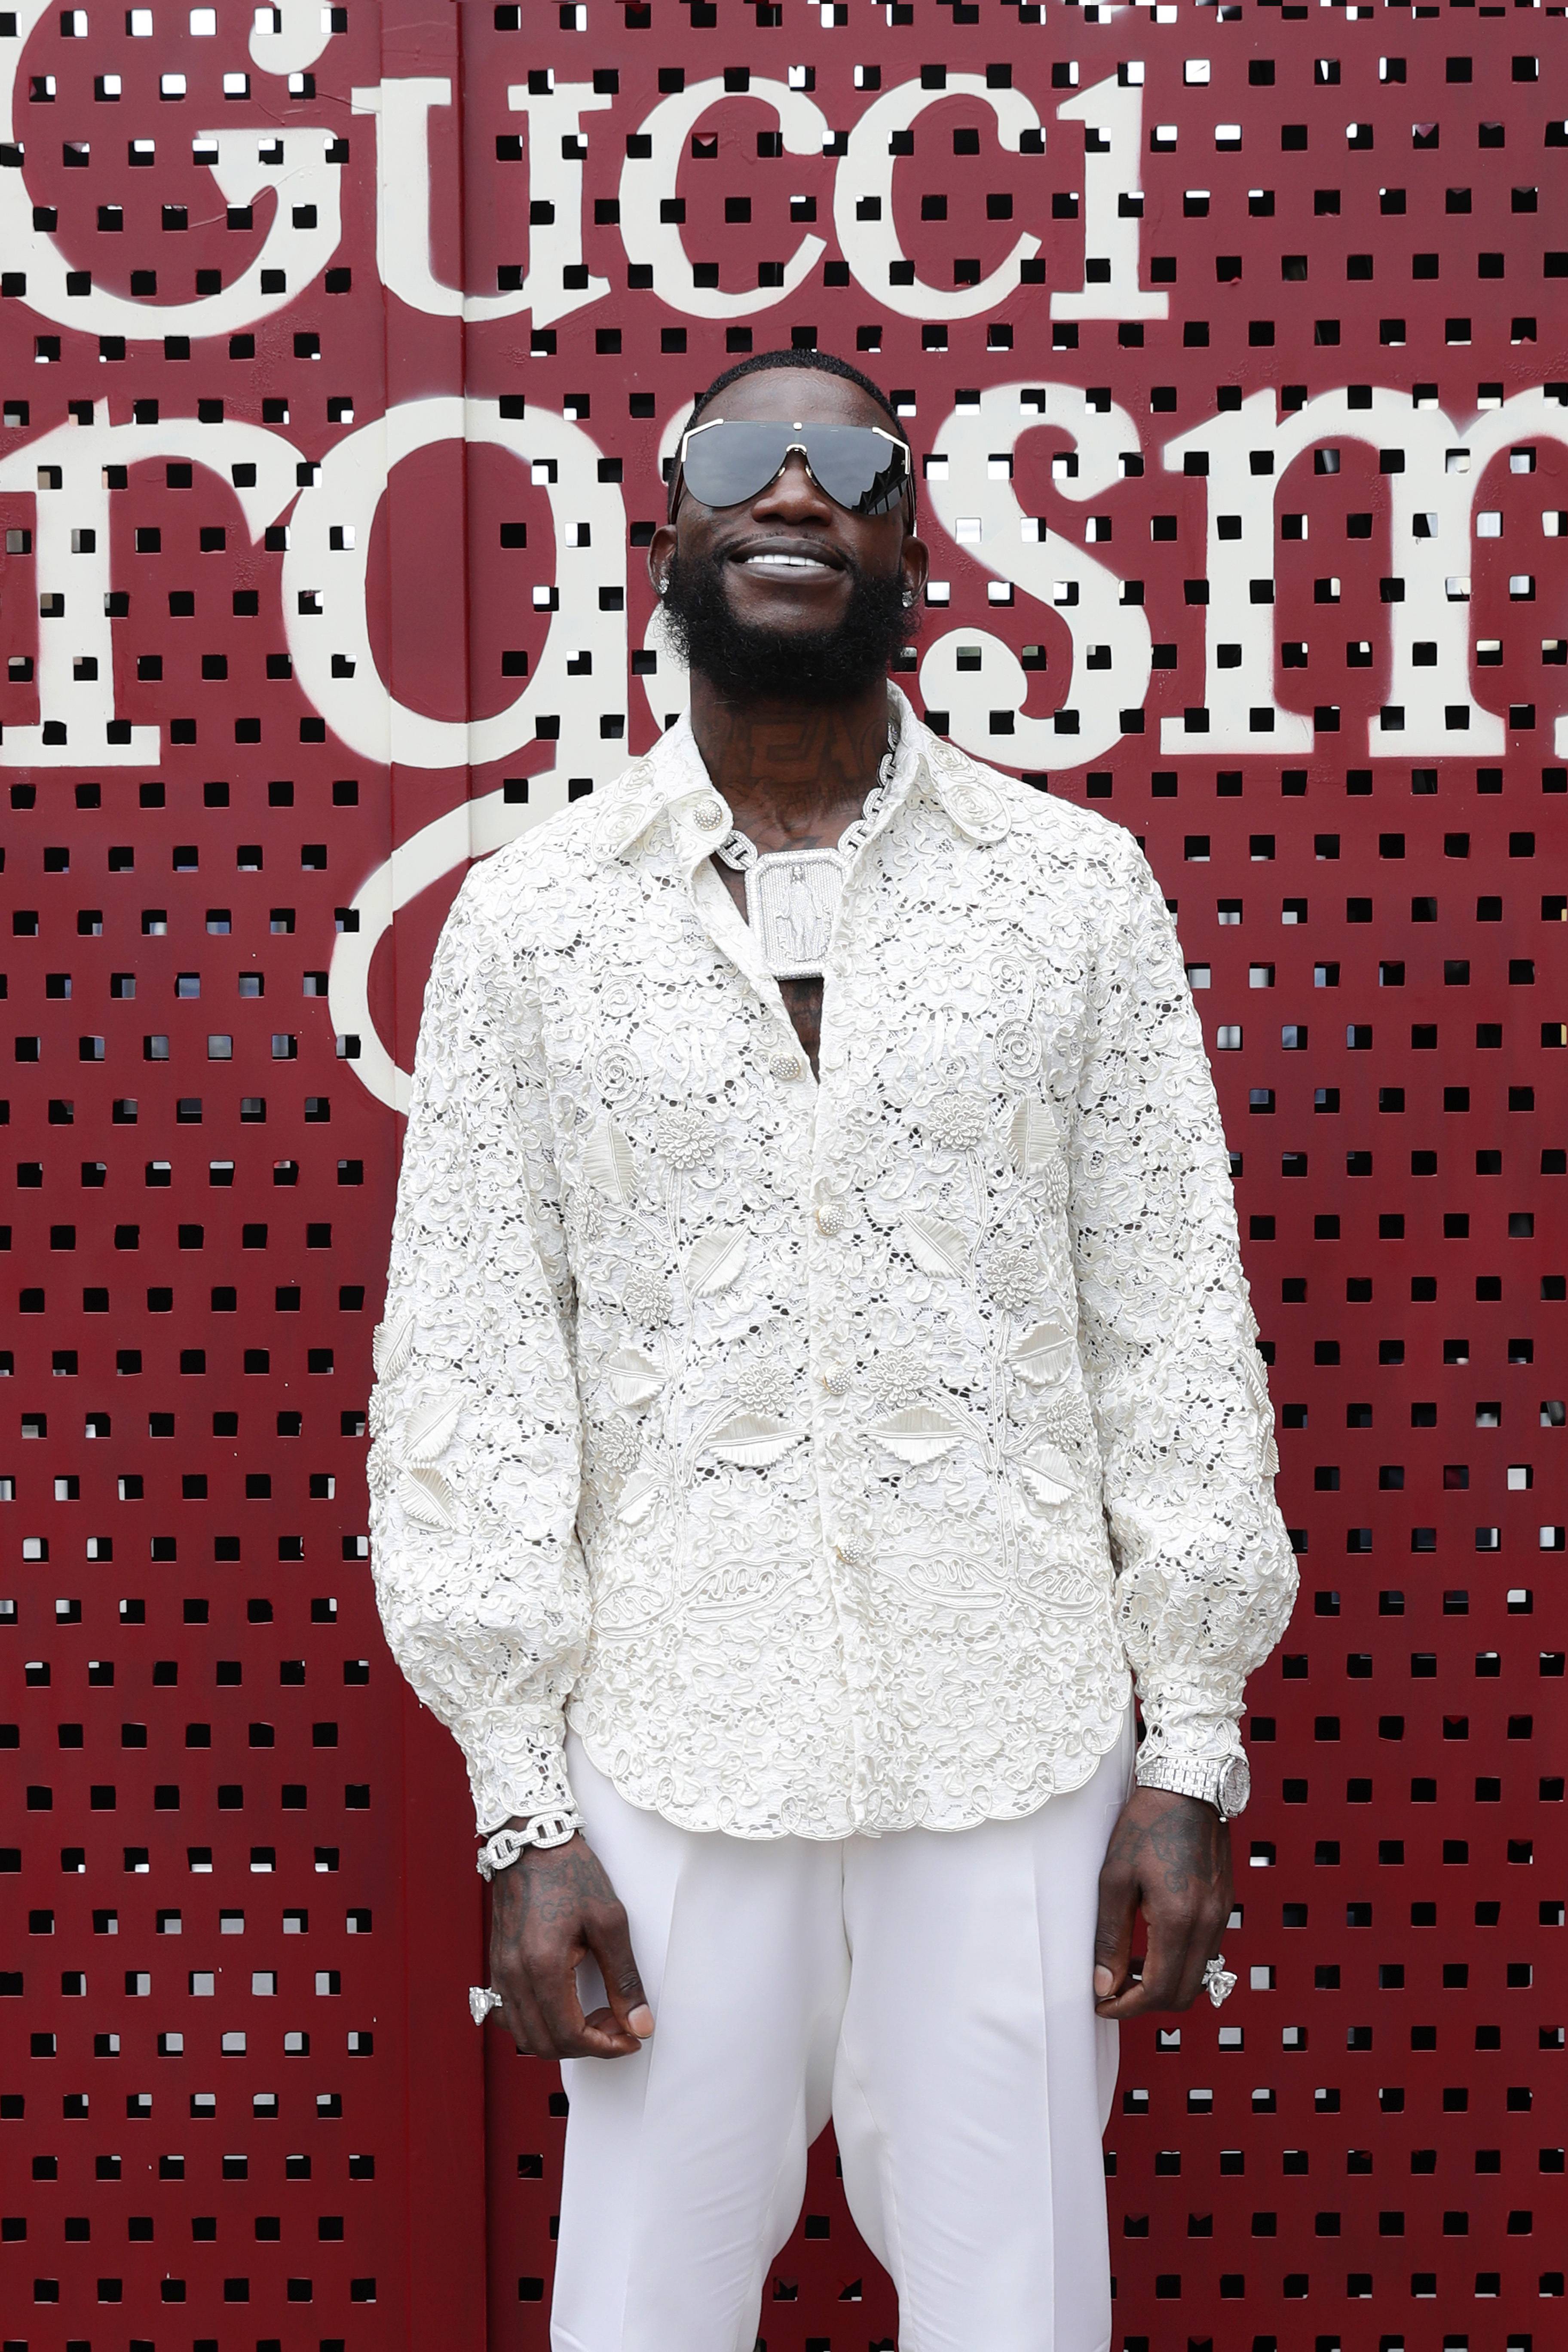 Gucci Mane Wears Traditional Dress In Dubai To Avoid Looking 'Like